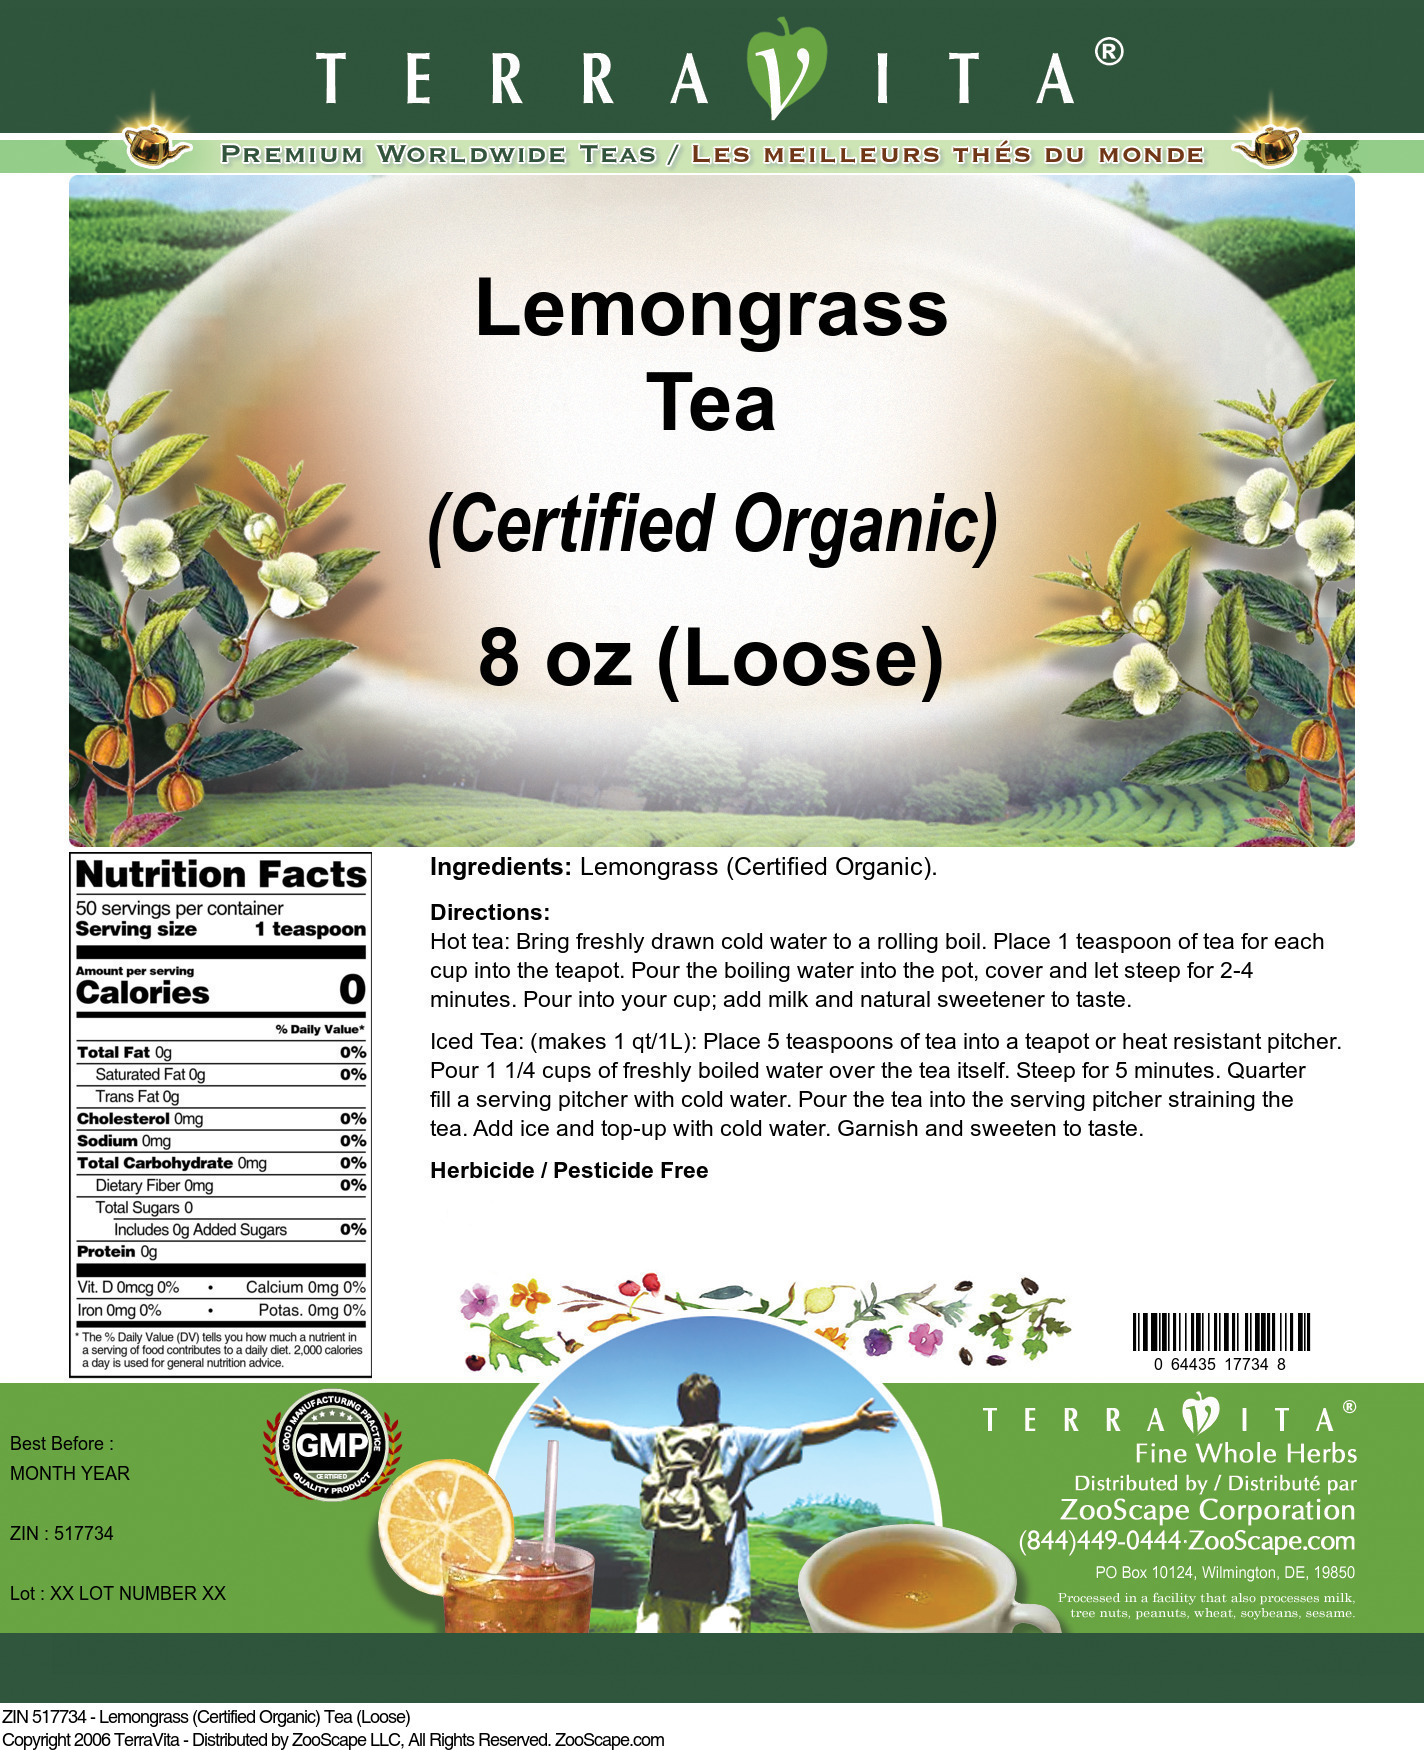 Lemongrass (Certified Organic) Tea (Loose) - Label